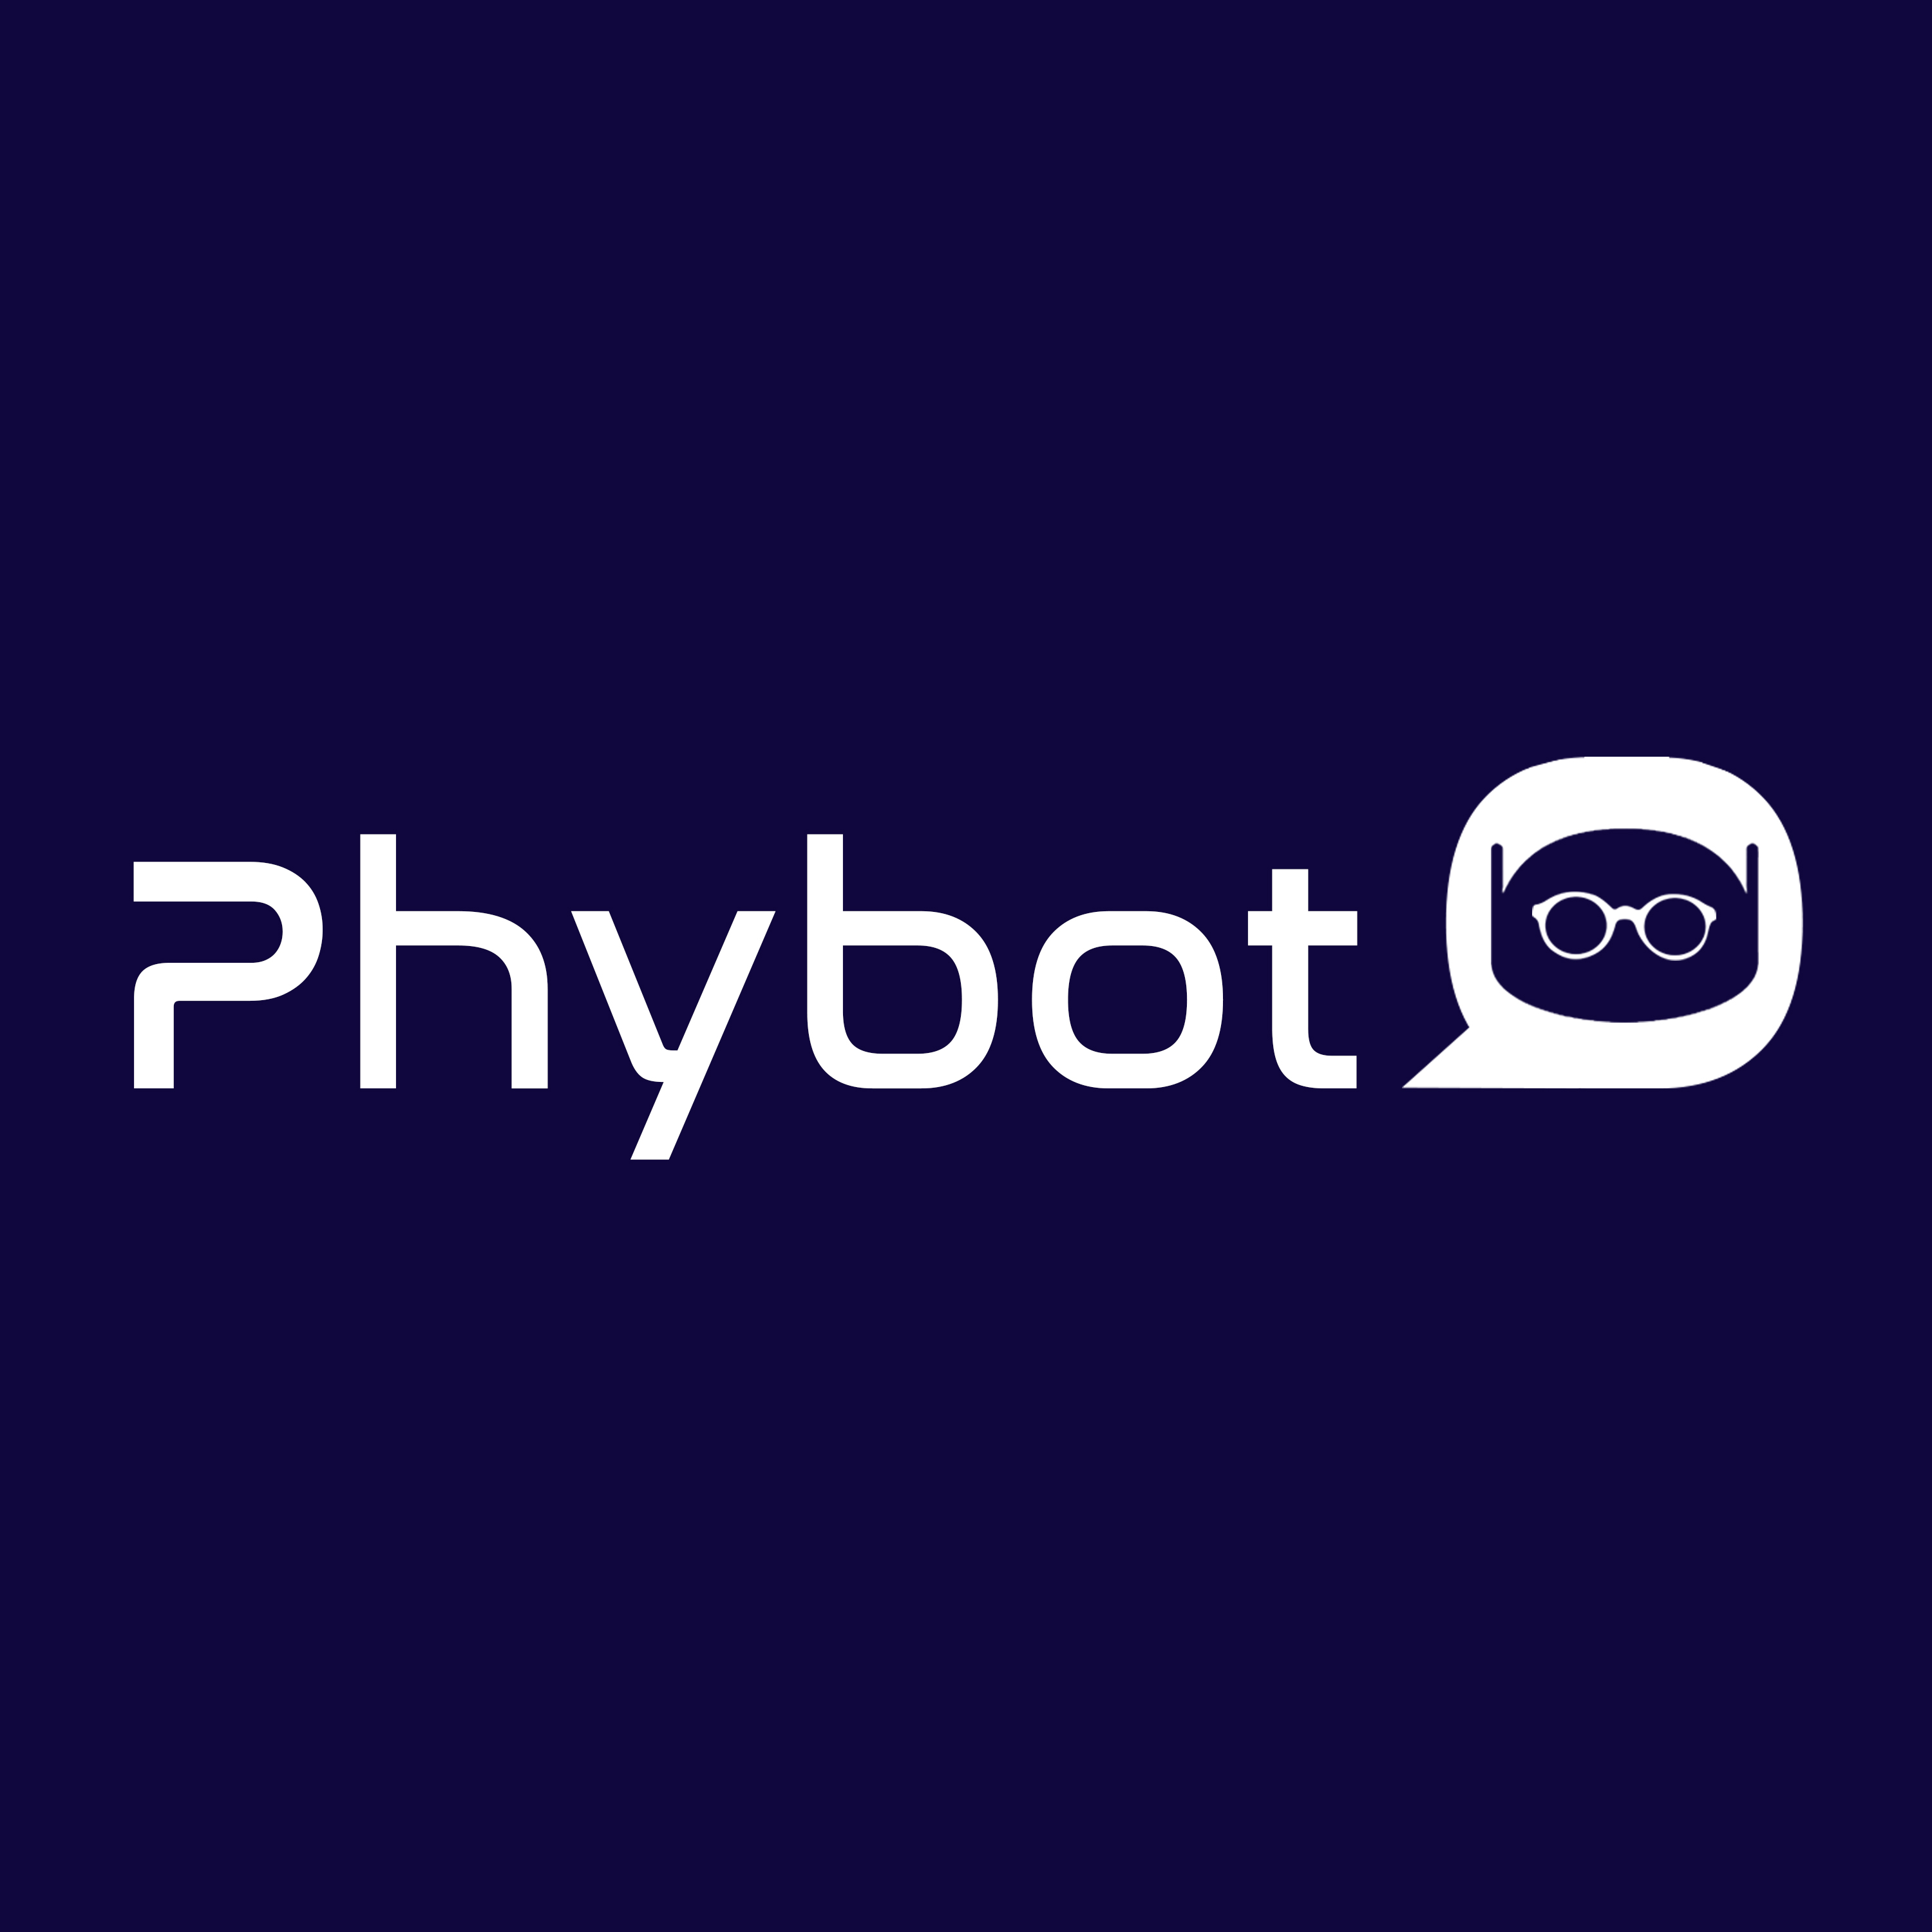 Phybot Branding & Print